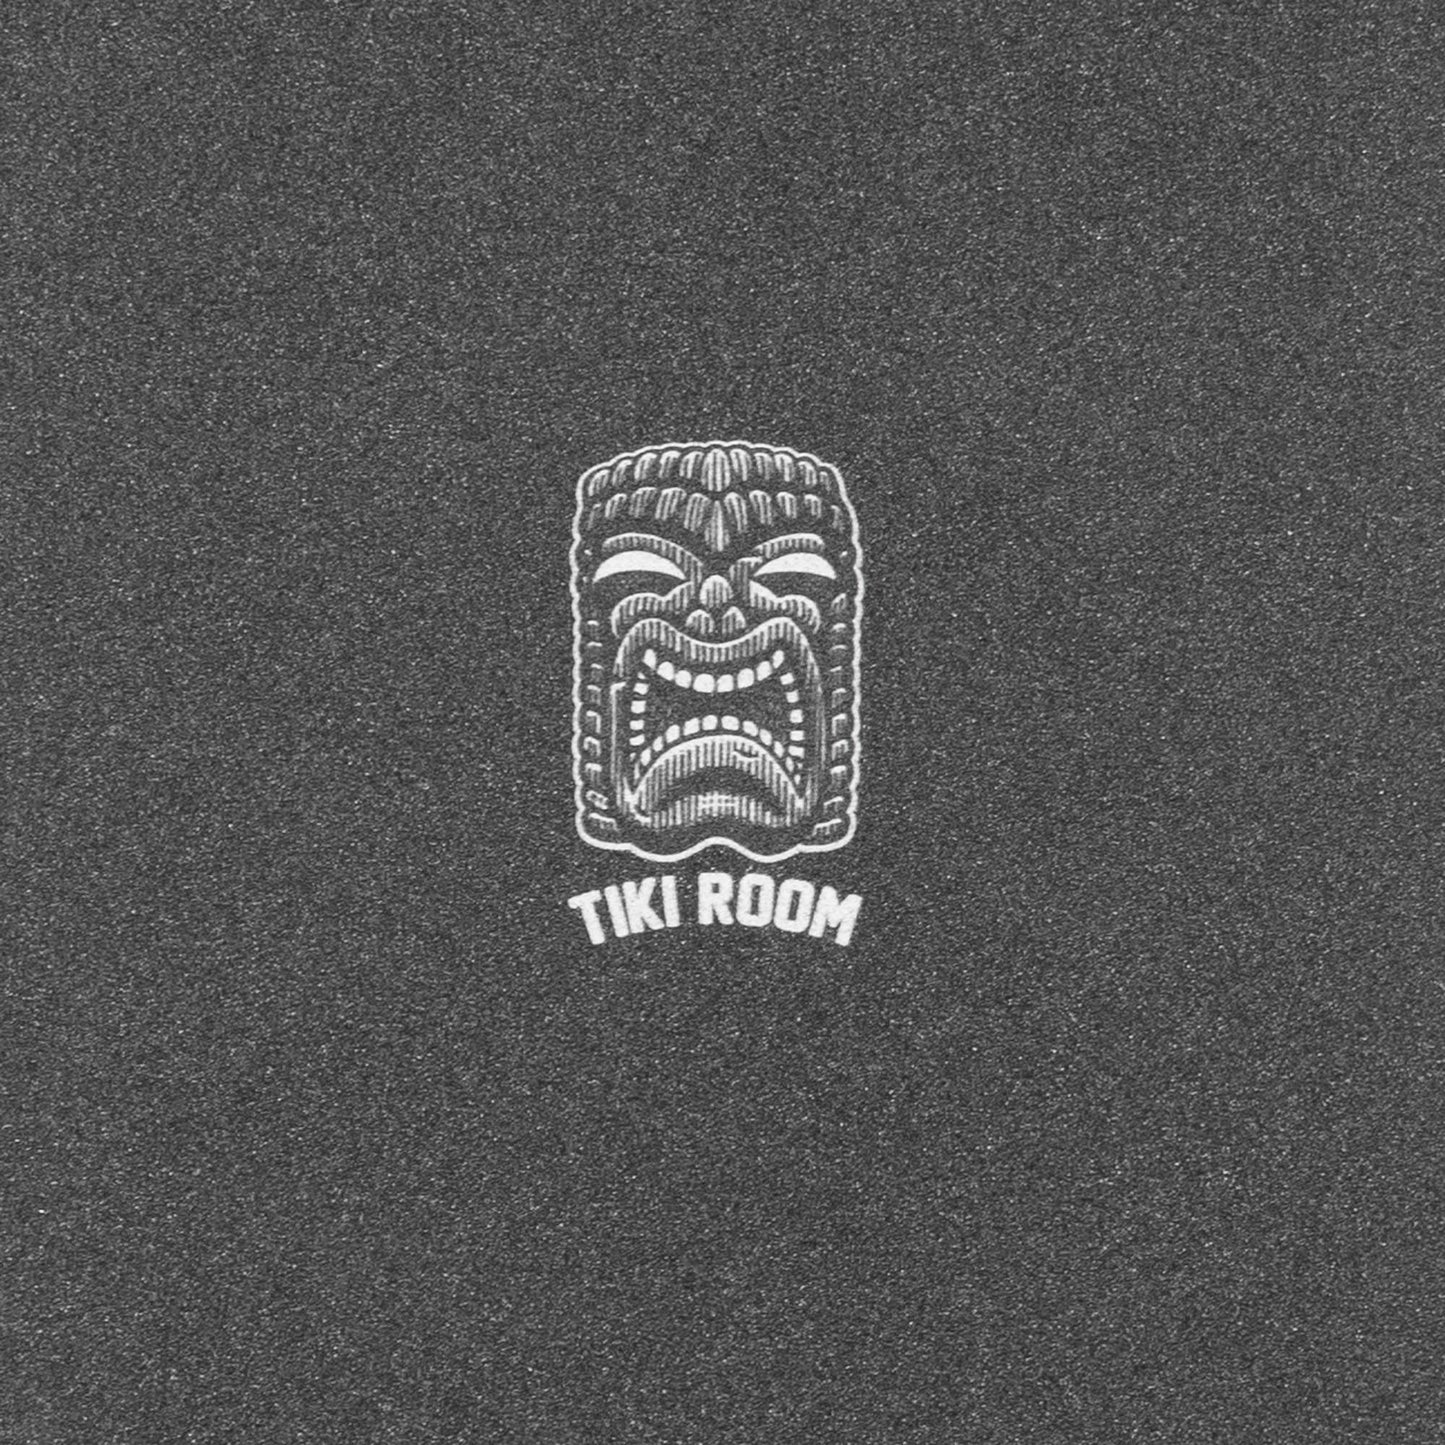 Tiki Room Kona Head printed grip (9", Jessup) - Tiki Room Skateboards - 2